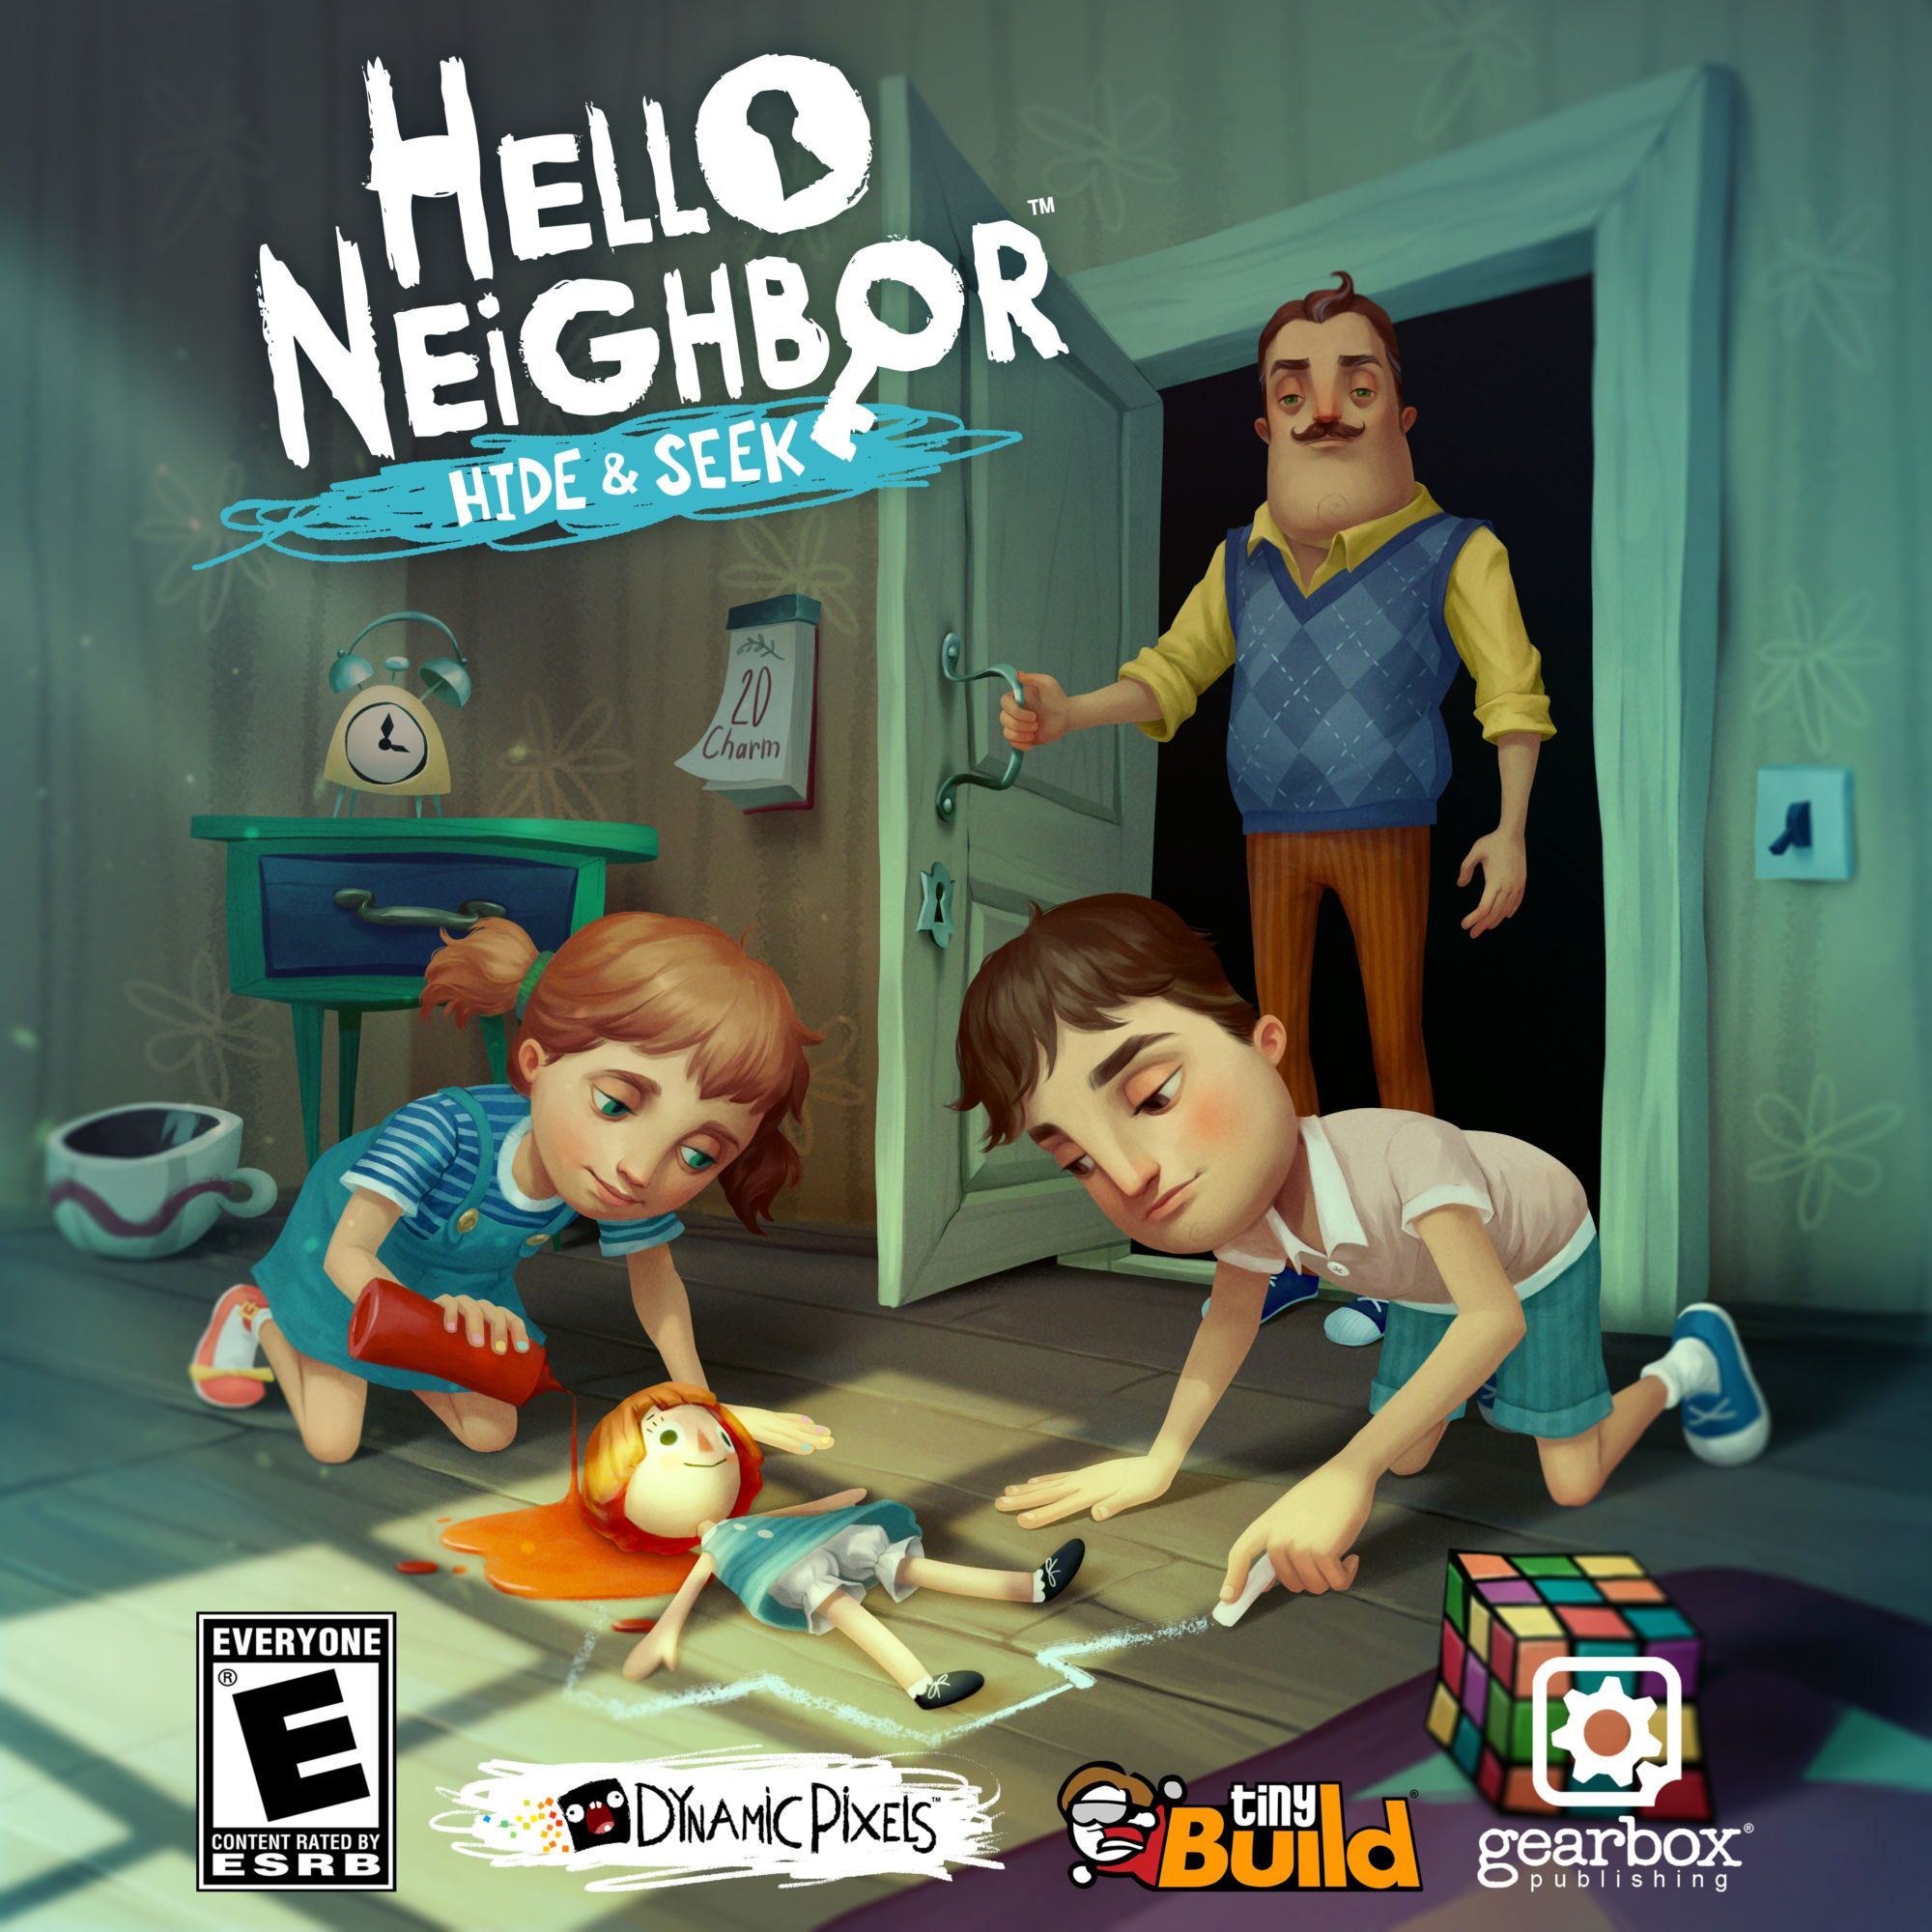 Привет сосед прятки на телефон. Hello Neighbor диск. Привет сосед Hide and seek. Hello Neighbor ПРЯТКИ. Диск с игрой привет сосед.